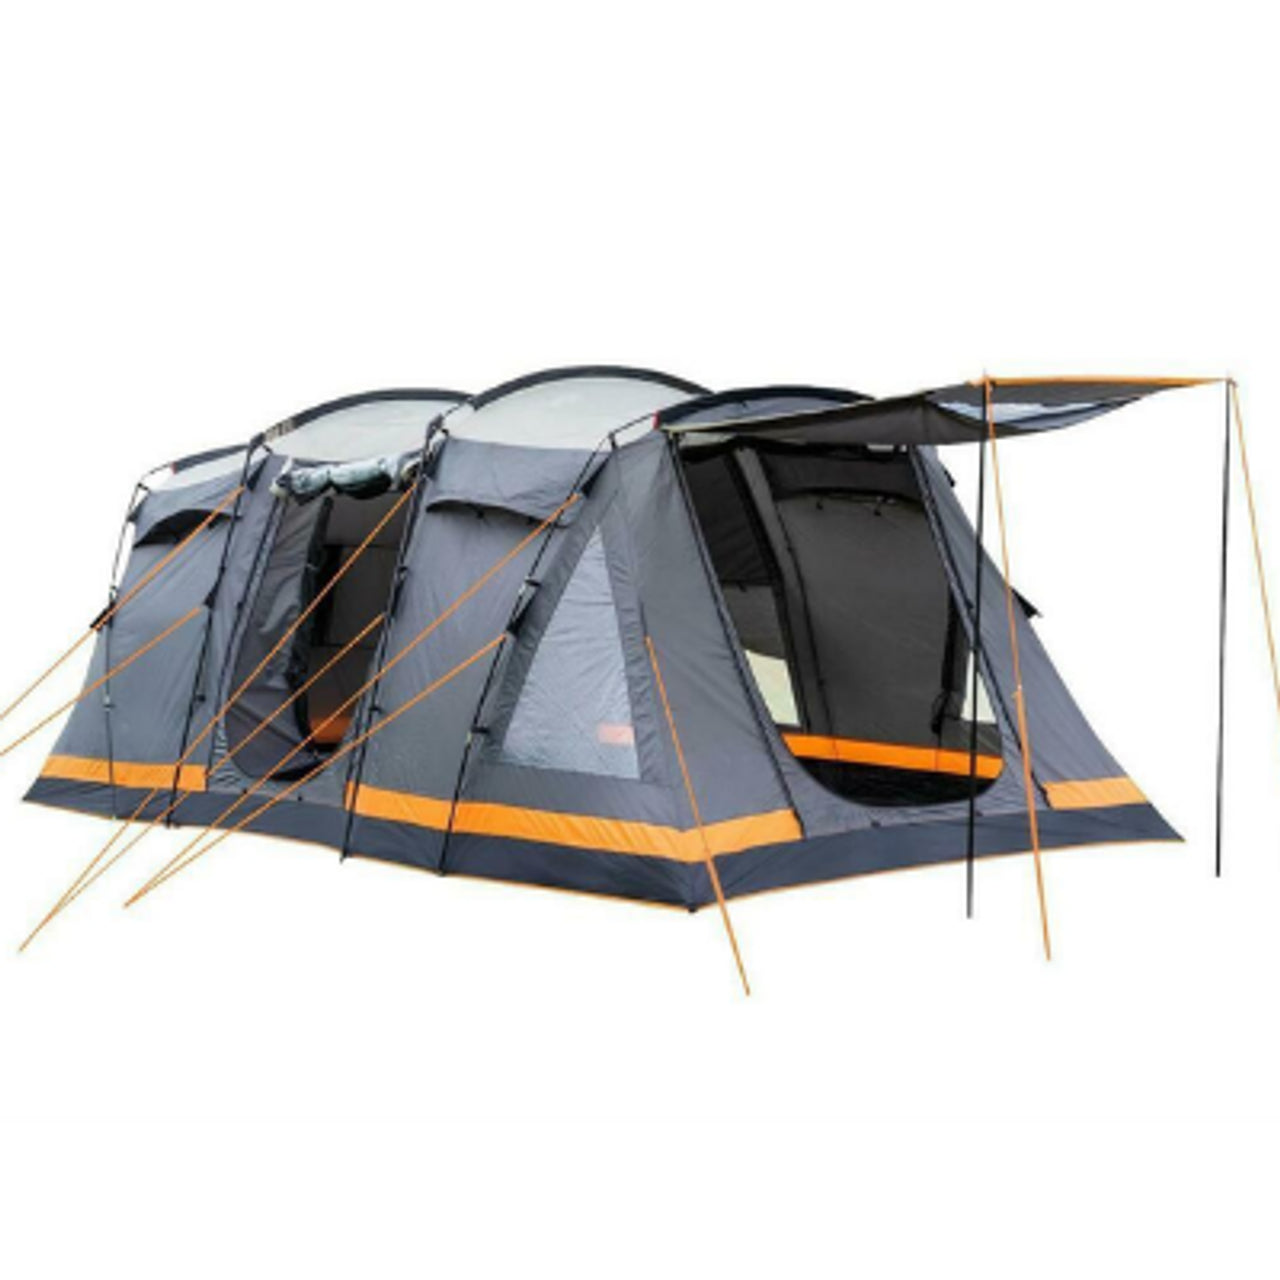 Orion 6 Berth Tent